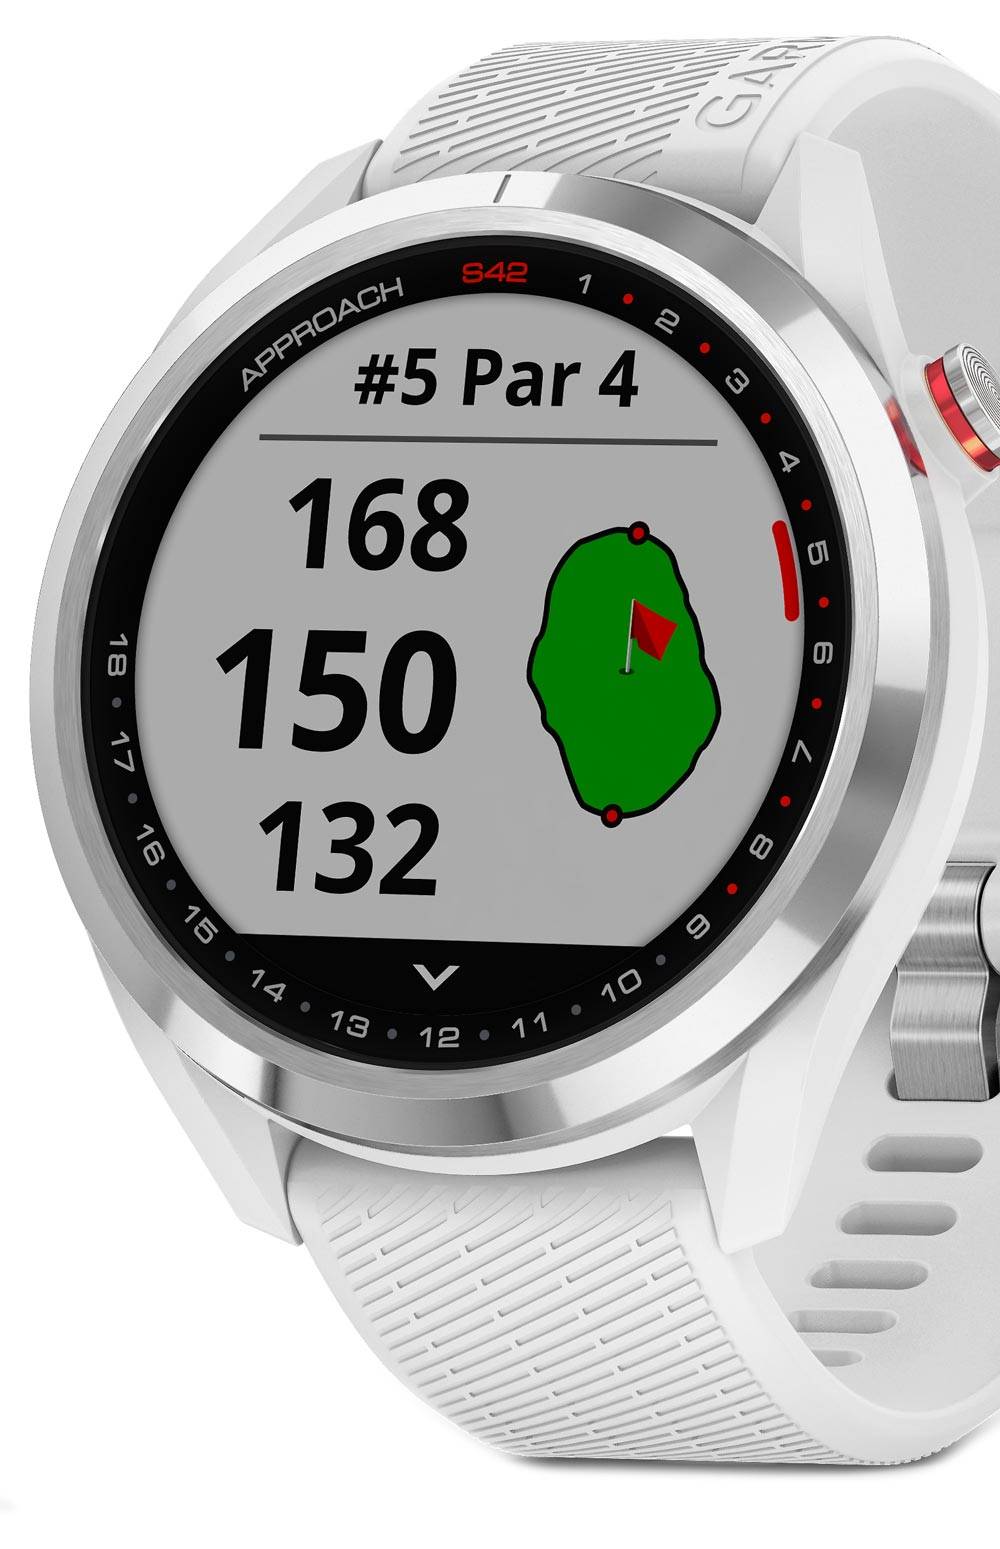 Ziek persoon Integreren speer The Best Garmin Golf Watches for 2023 | Golf GPS Watch Comparison